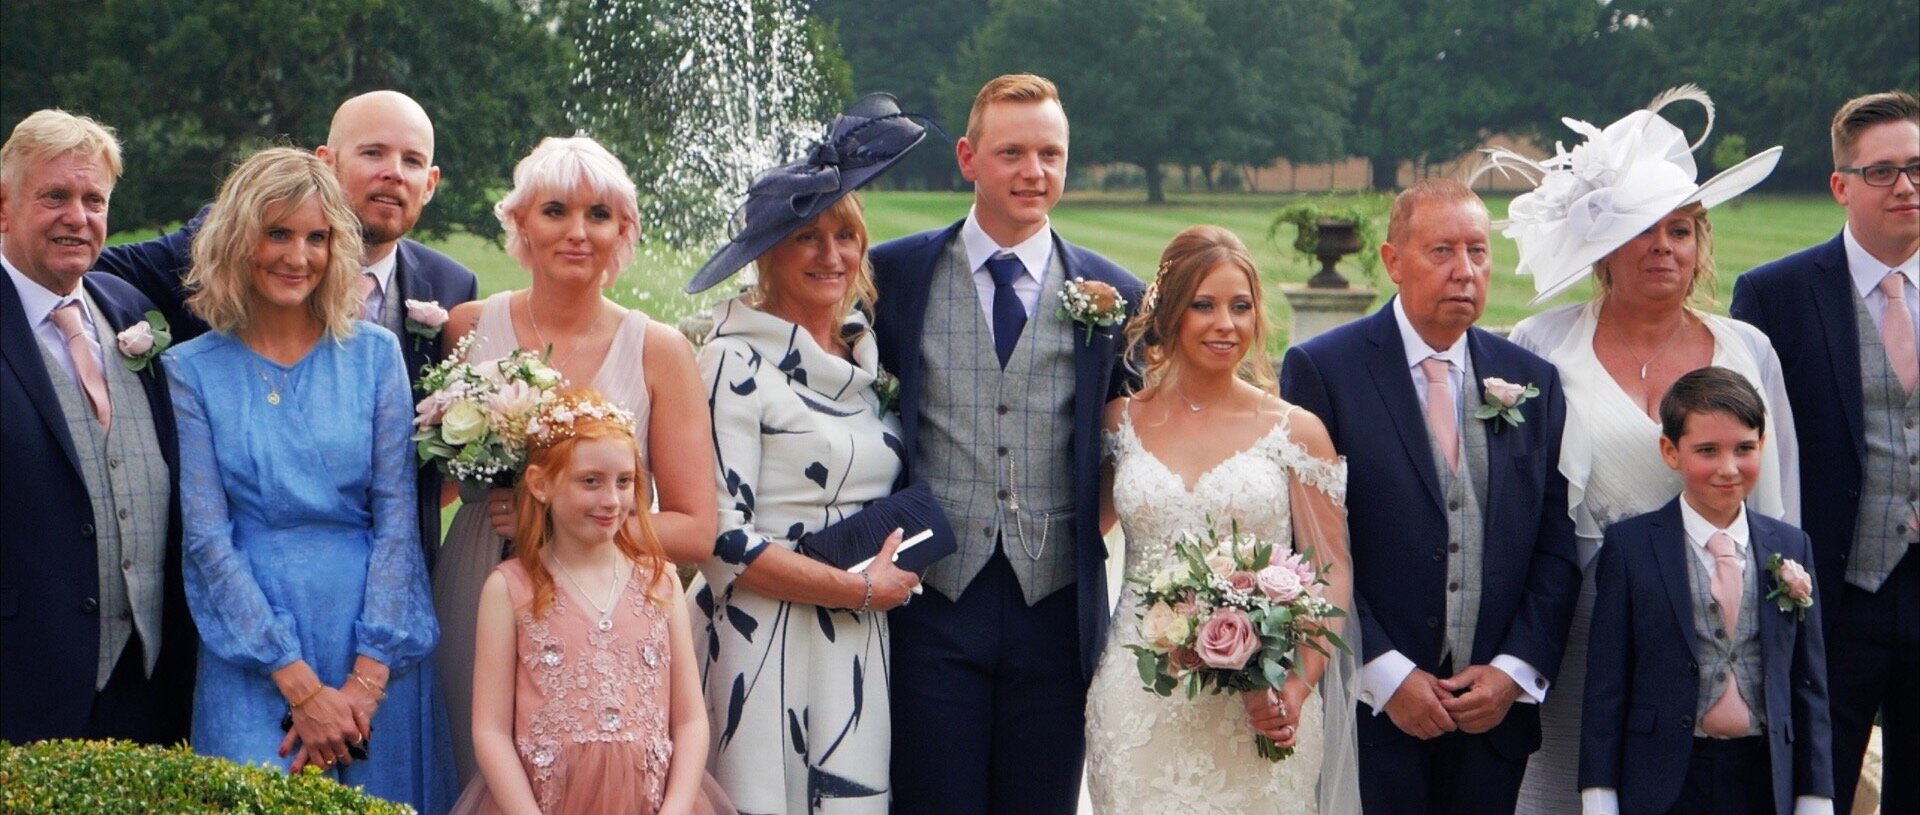 Wedding photos at Quendon Hall Essex videos.jpg